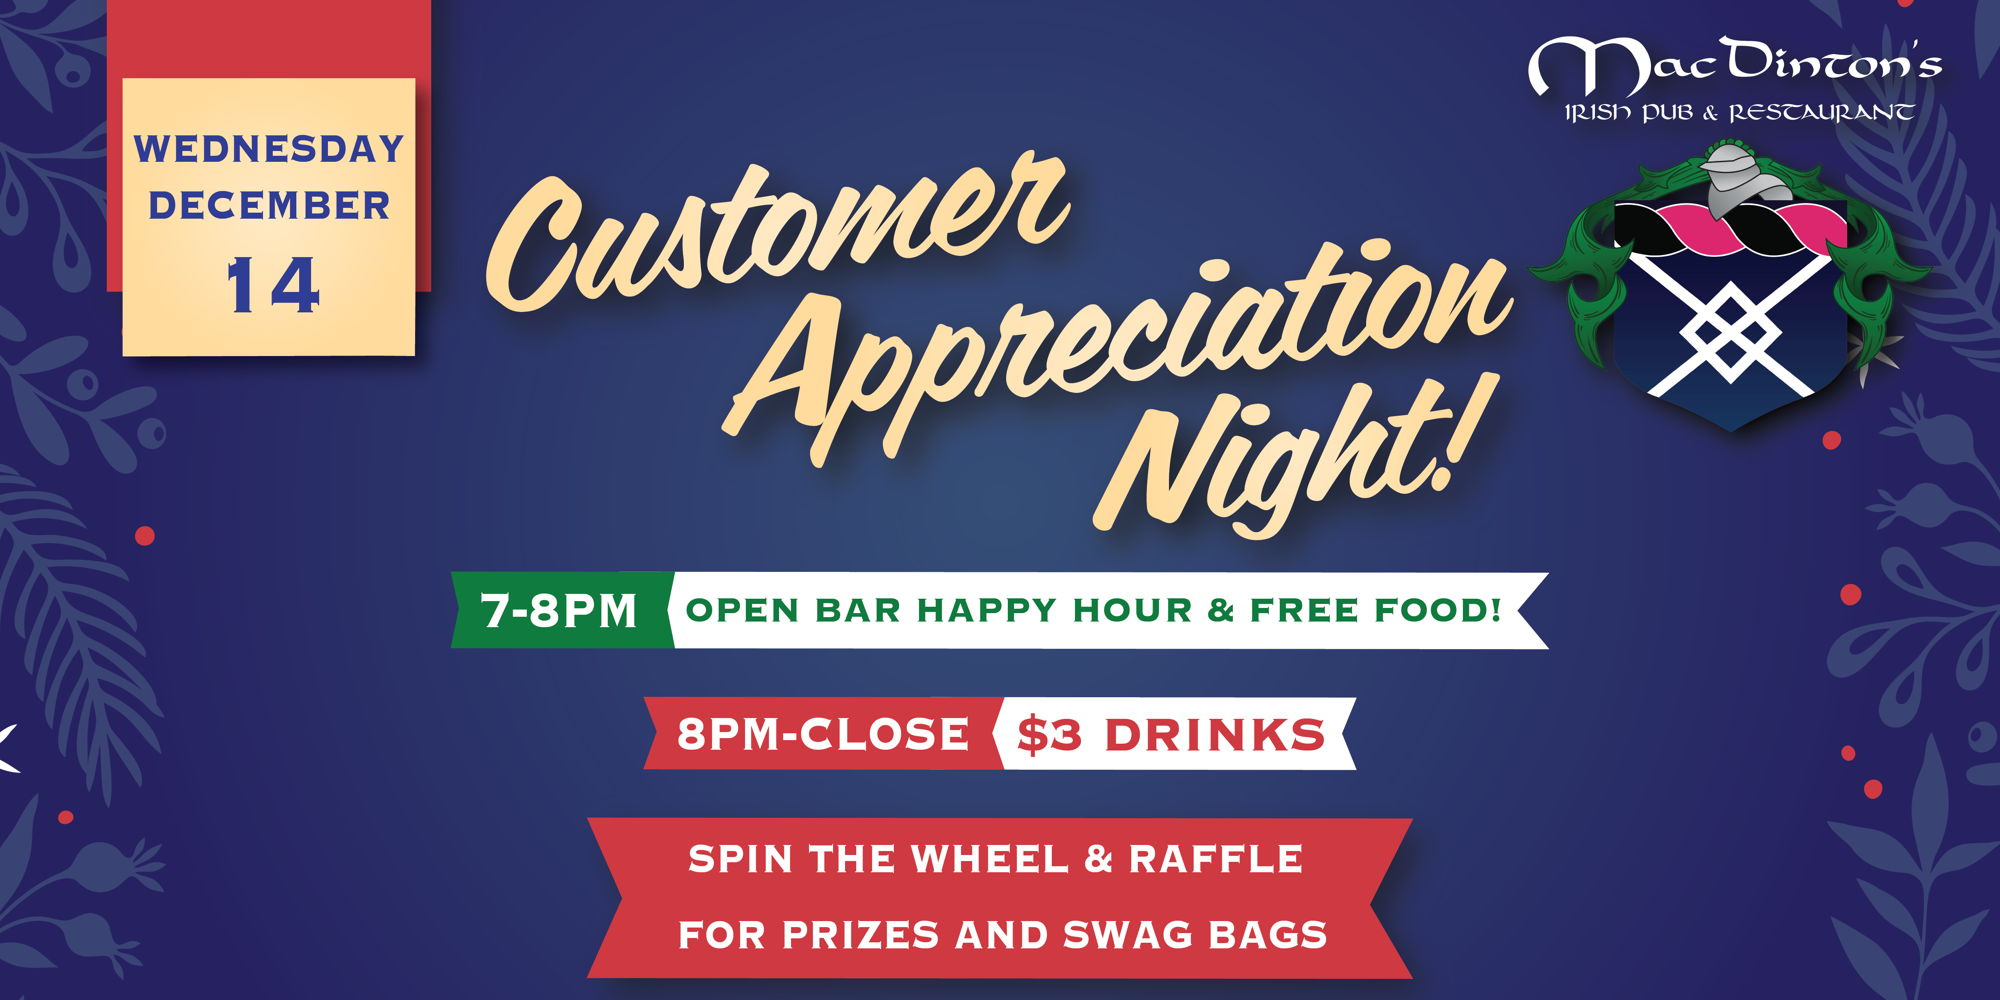 Customer Appreciation Night! promotional image